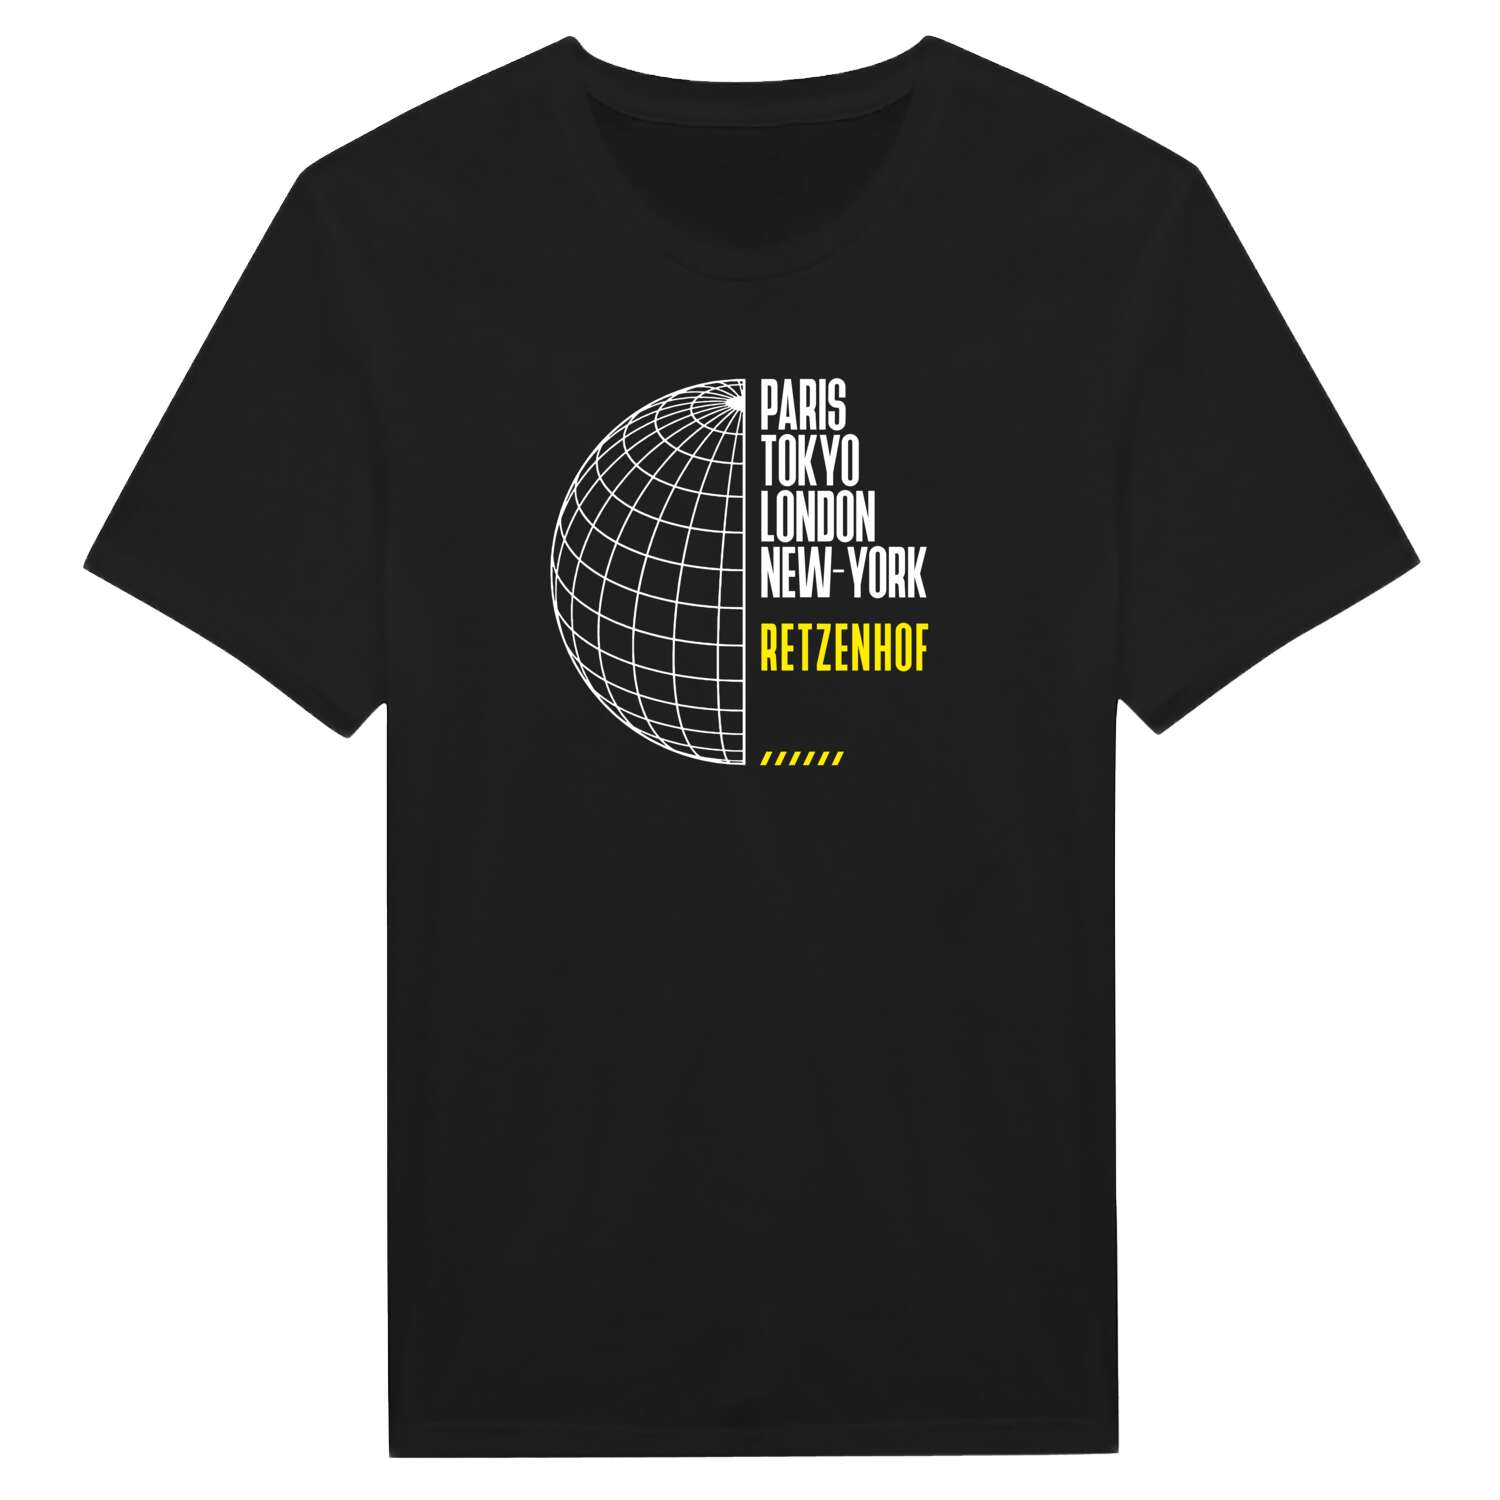 Retzenhof T-Shirt »Paris Tokyo London«